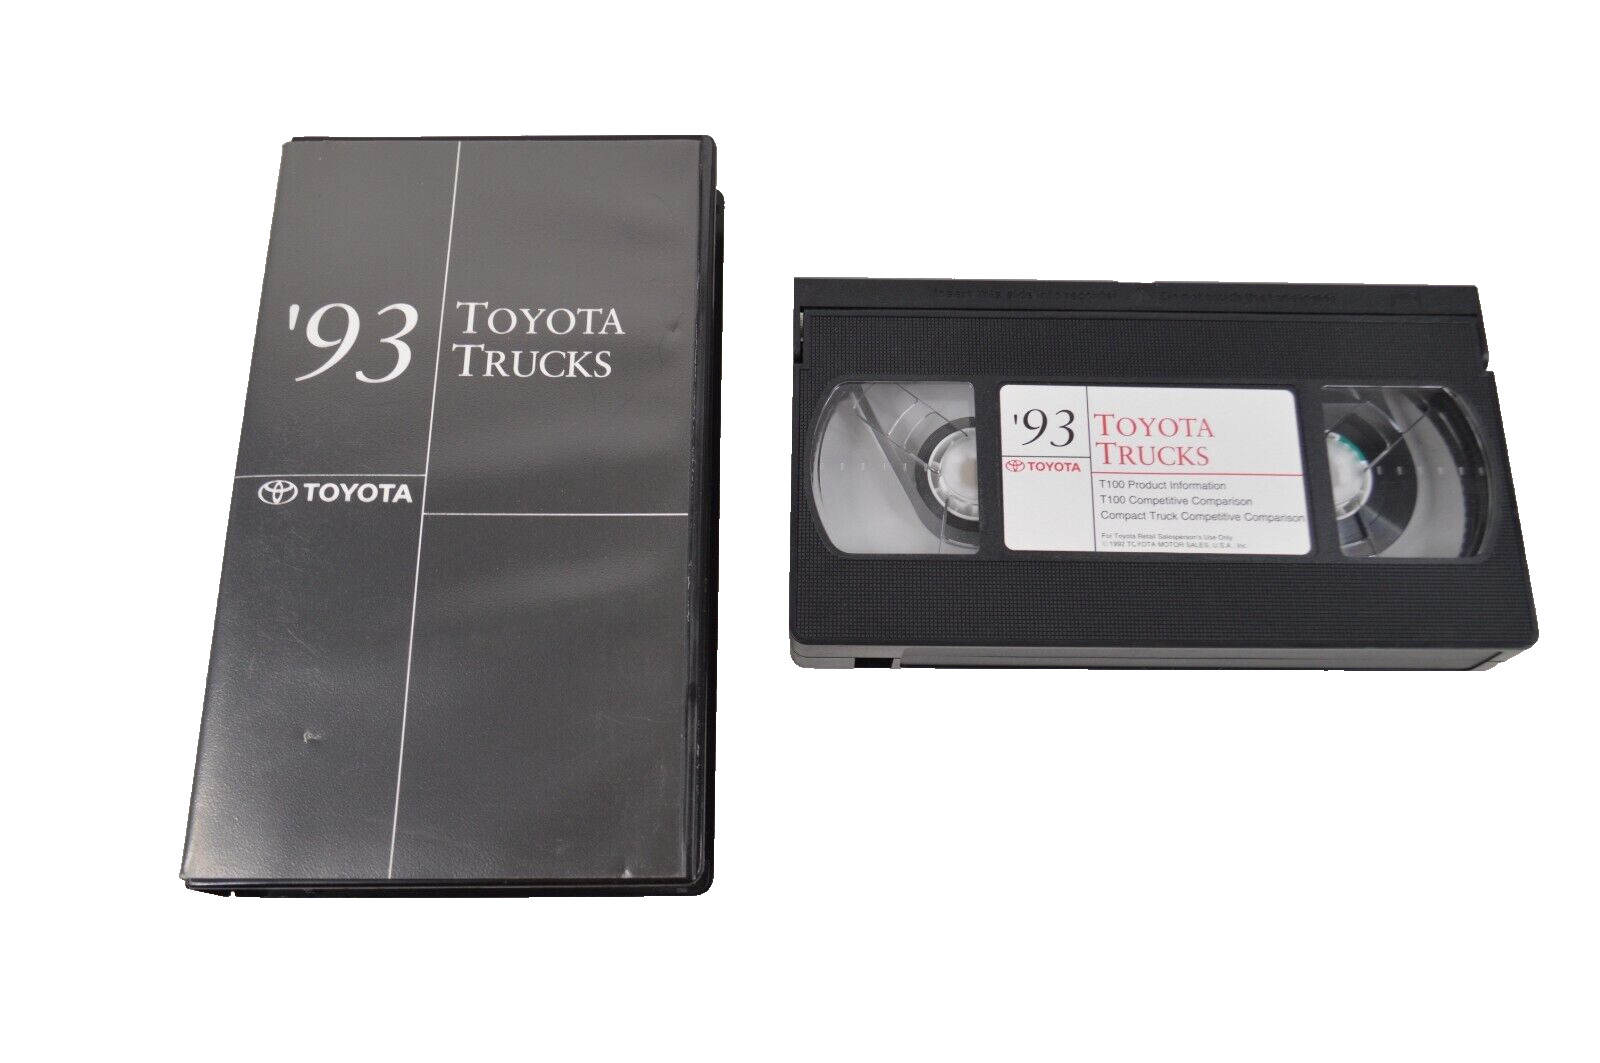 1993 Toyota Trucks Promotional VHS Tape Cassette Clamshell T100 Promo Comparison